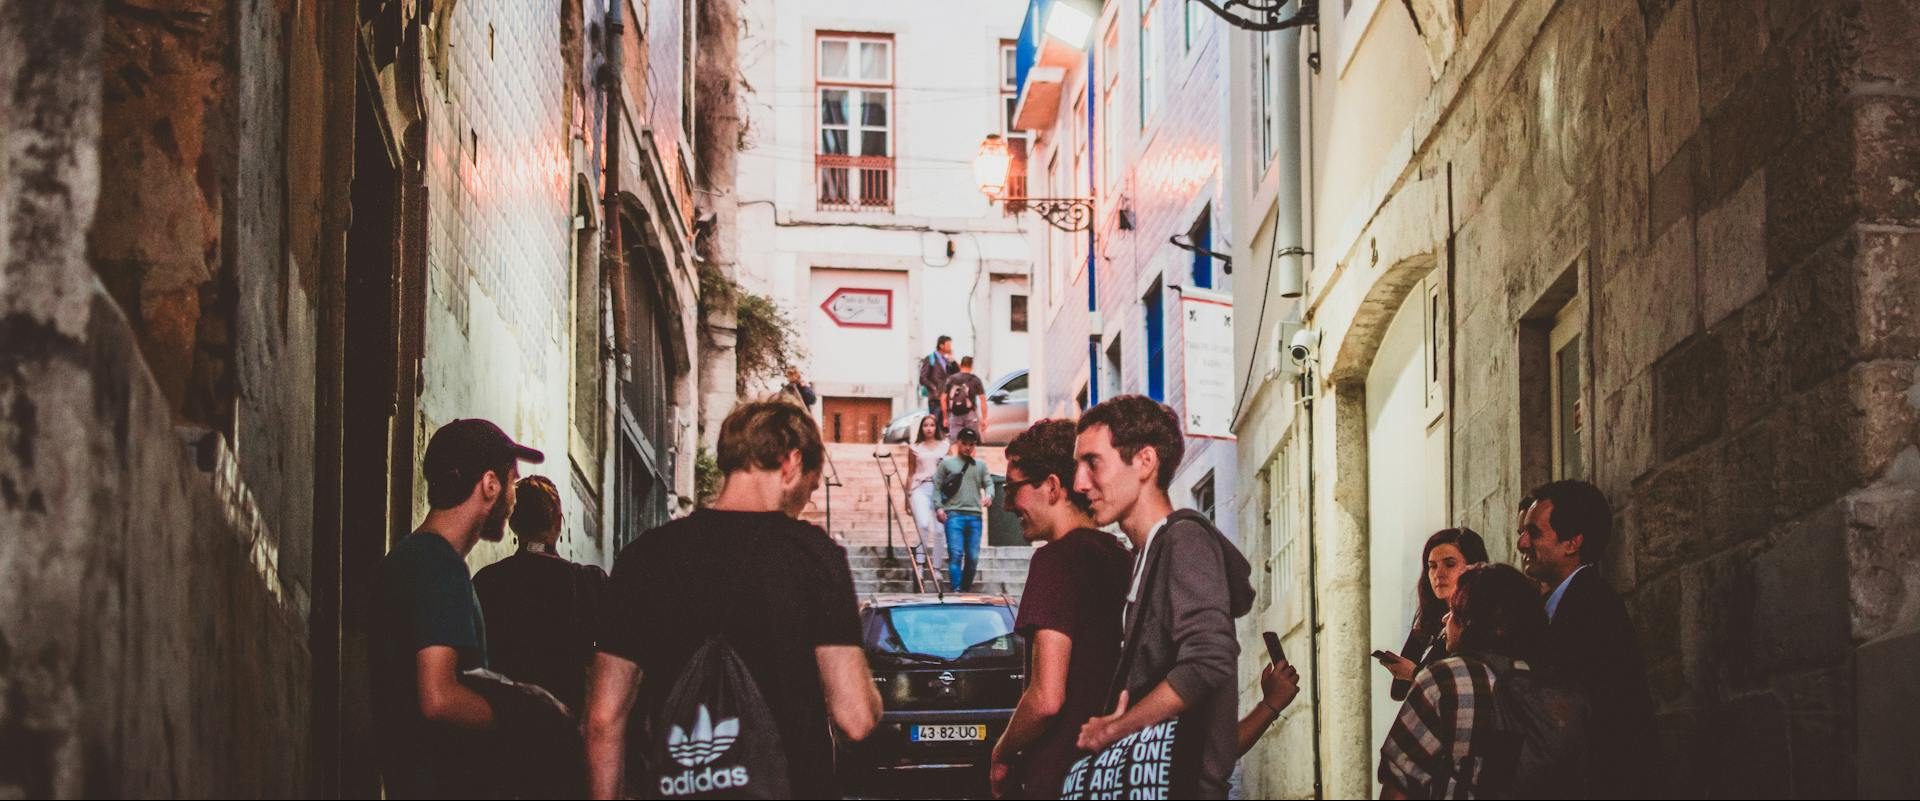 Moving to Portugal - Lisboa, Lisboa, Portugal Group of Men on Alley